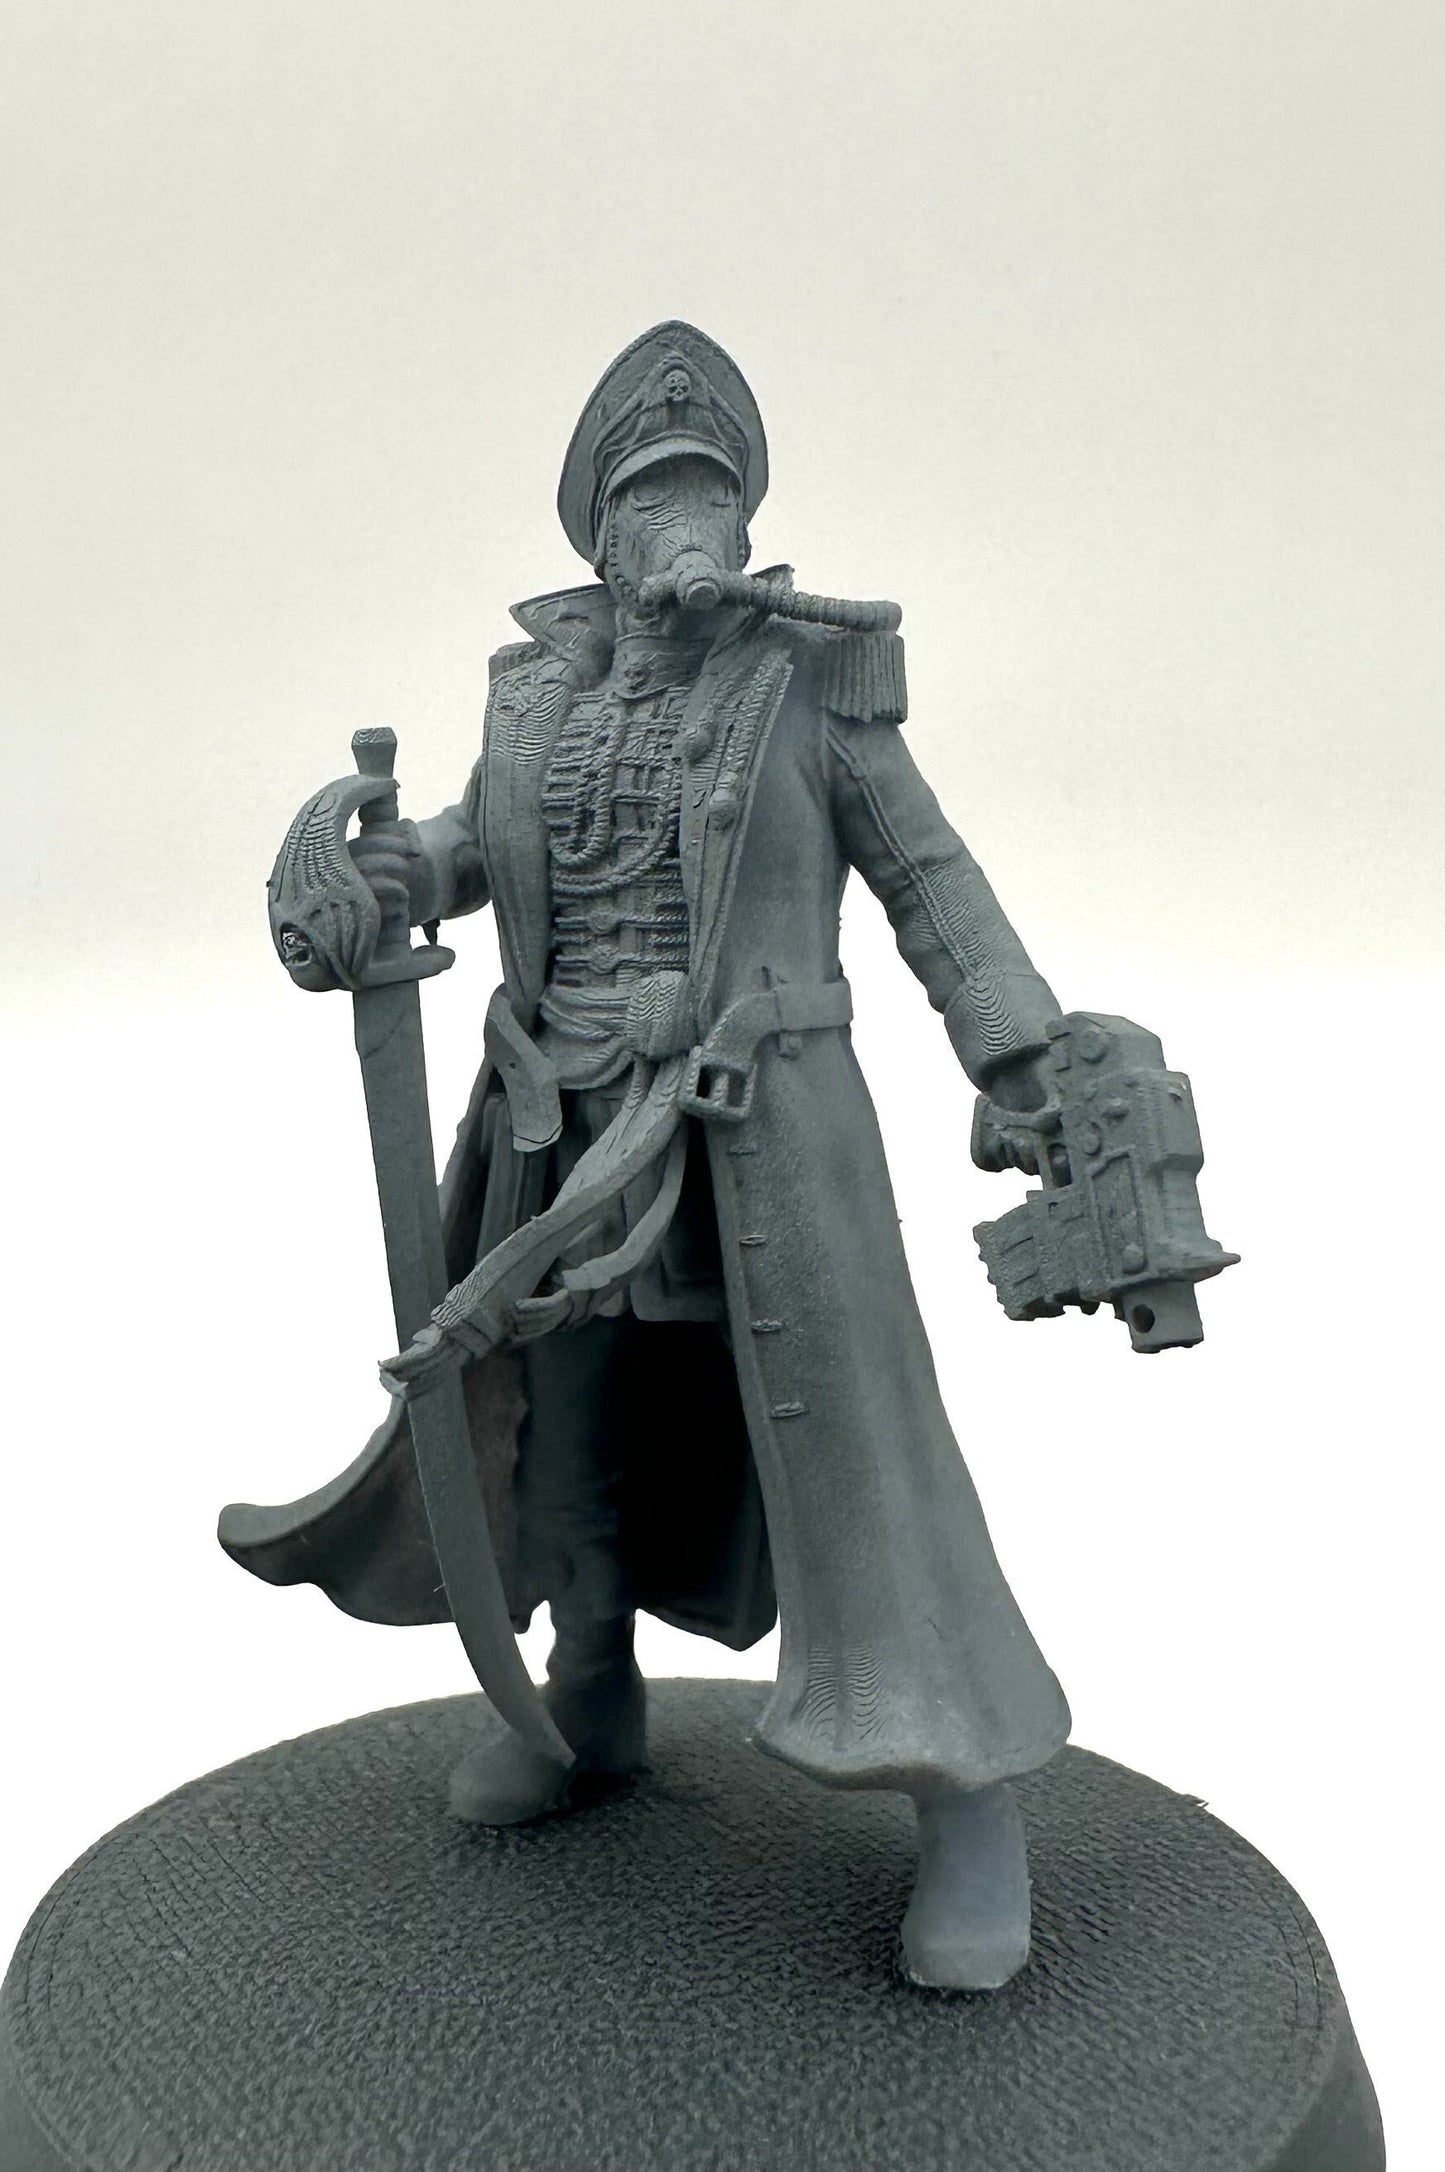 3D Printed Krieg Commissar Miniature by 3DArtGuy